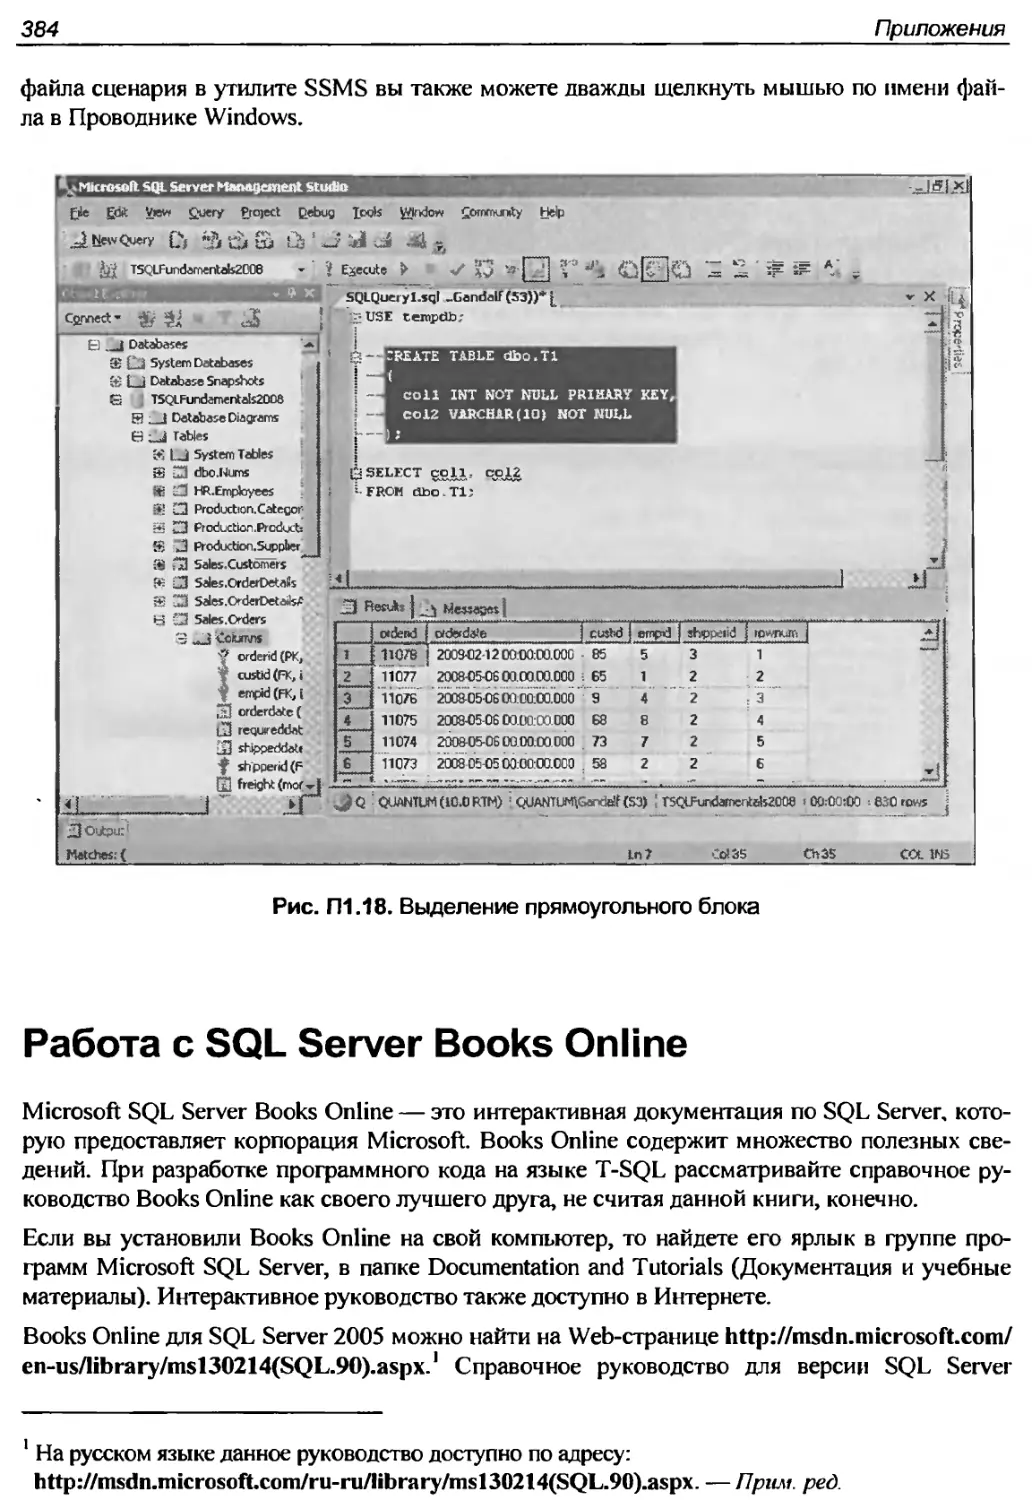 Работа с SQL Server Books Online